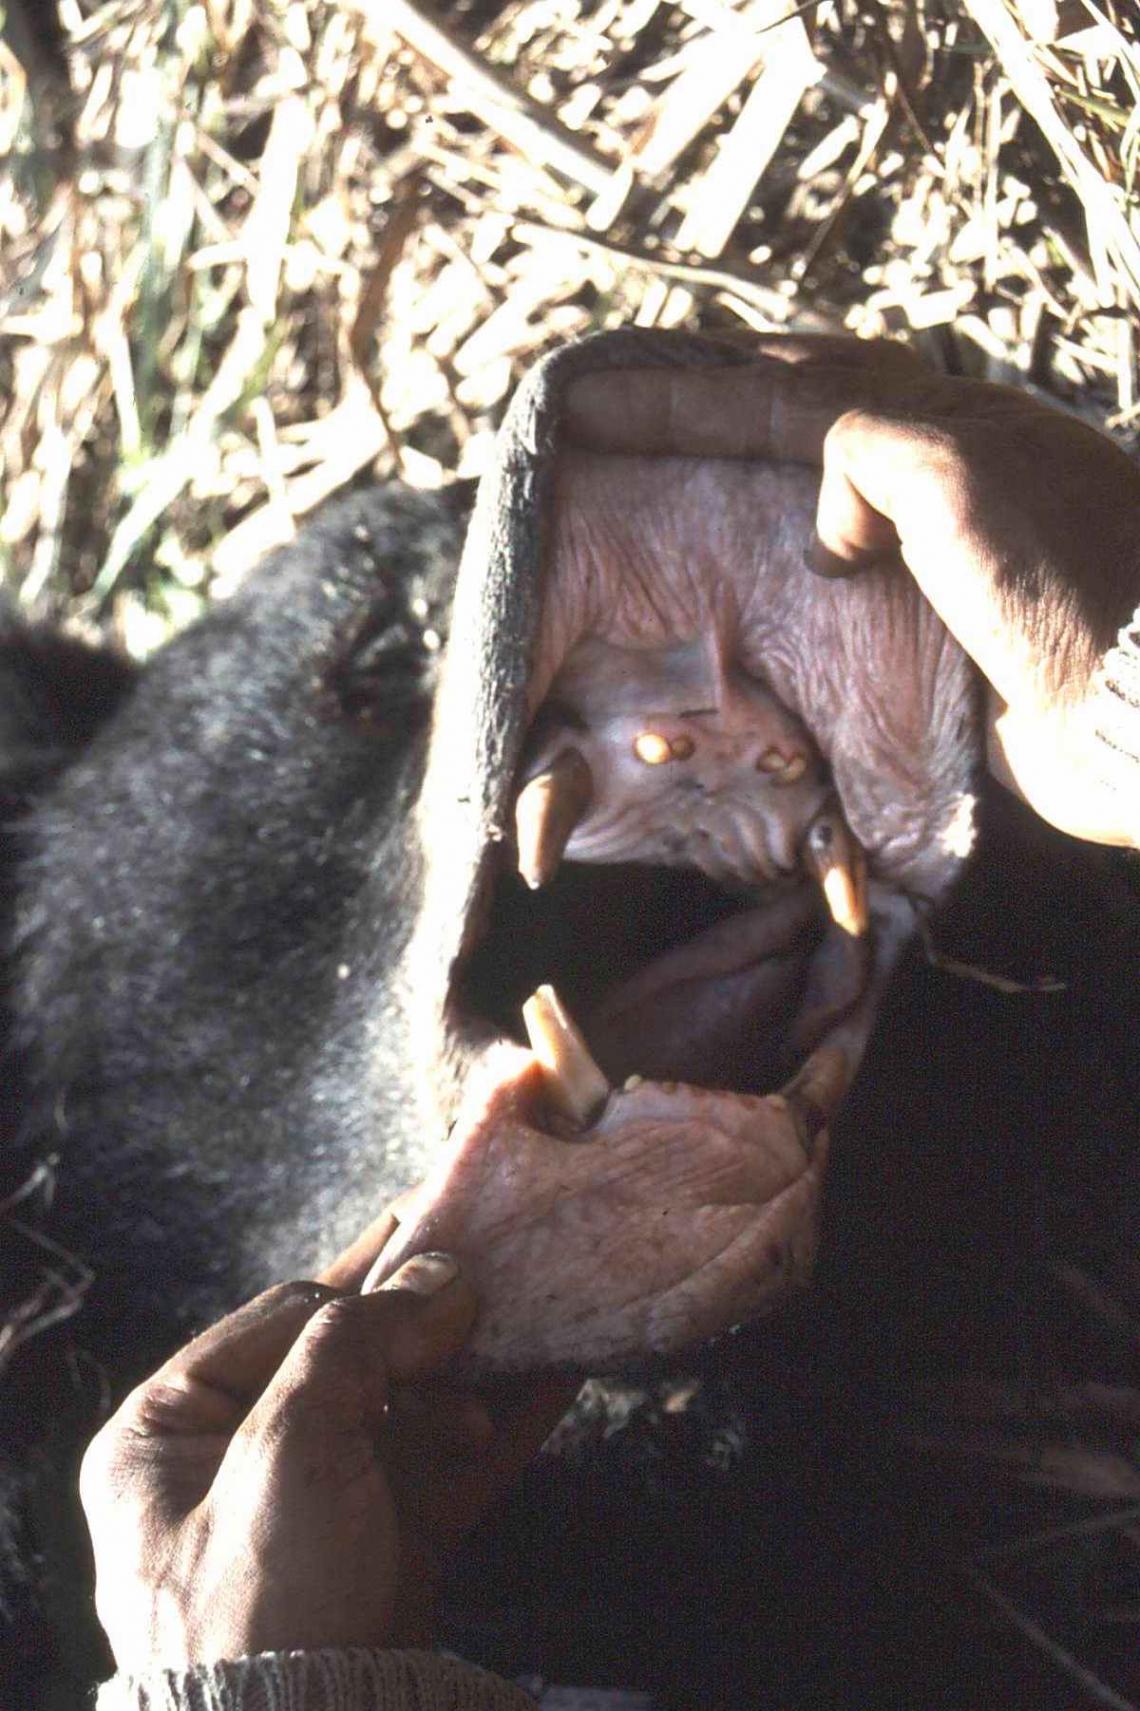 Sloth bear_M ursinus_Chitwan Nepal_missing incisors and large lips_D Garshelis